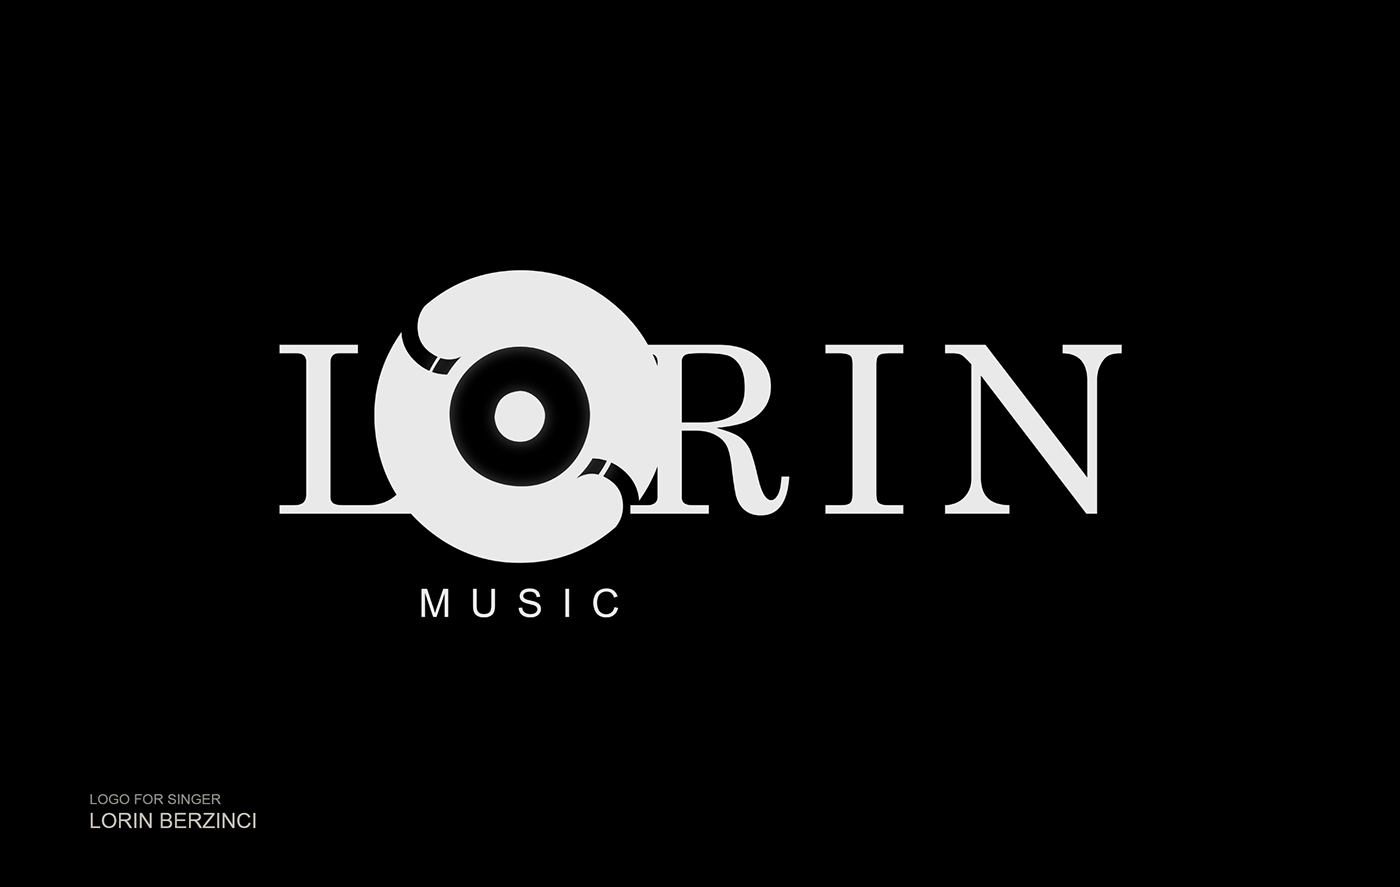 logo logos rasti hirori zorjwana Lorin berzinci saman group isoook